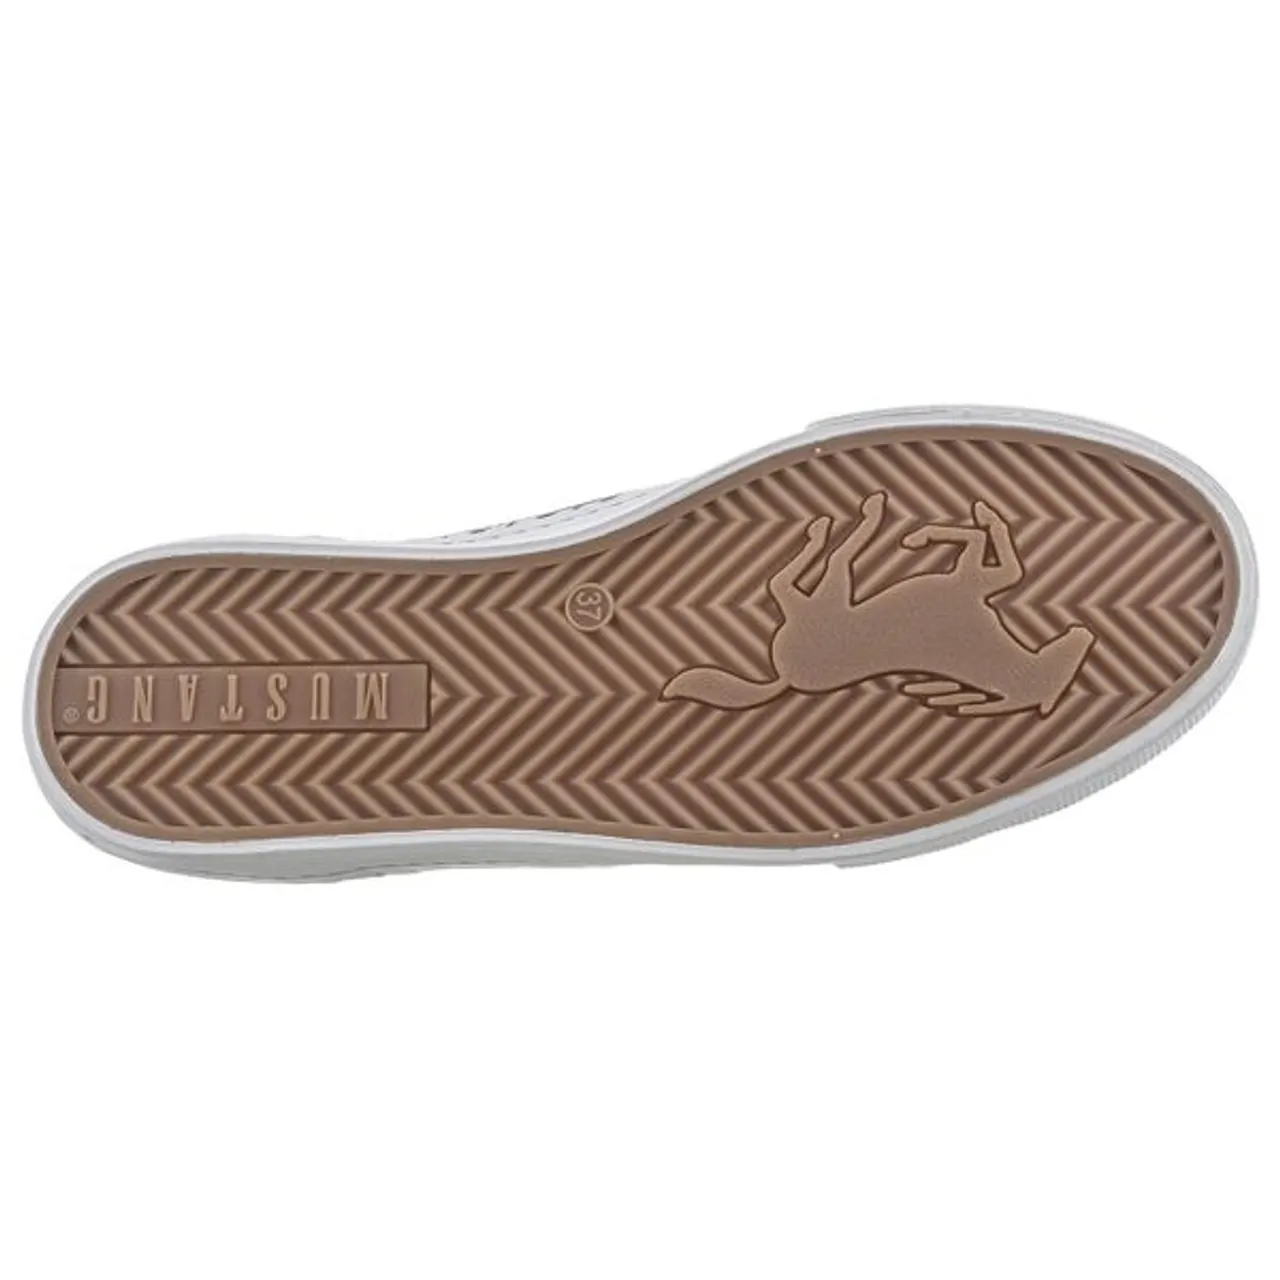 Sneaker MUSTANG SHOES Gr. 45, grau (graugrün) Damen Schuhe Sneaker Freizeitschuh, Halbschuh, Schnürschuh mit Plateausohle